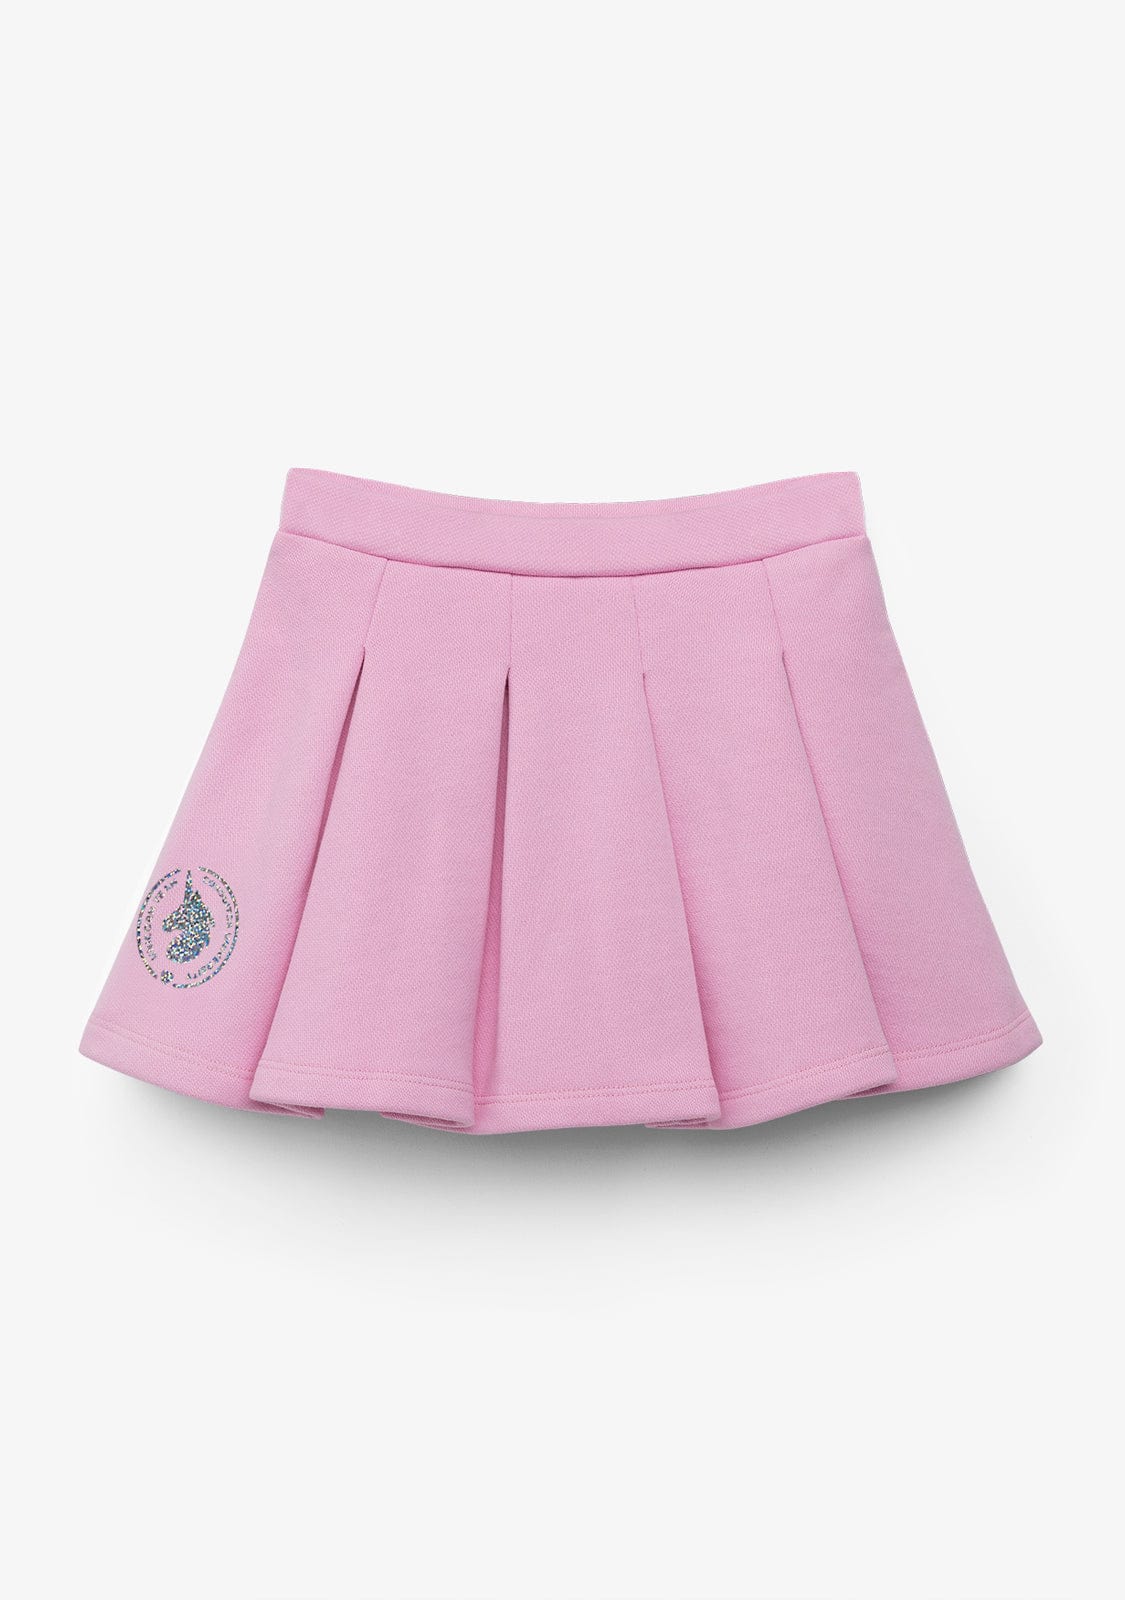 CONGUITOS TEXTIL Clothing Girl's Pink Unicorn Skirt